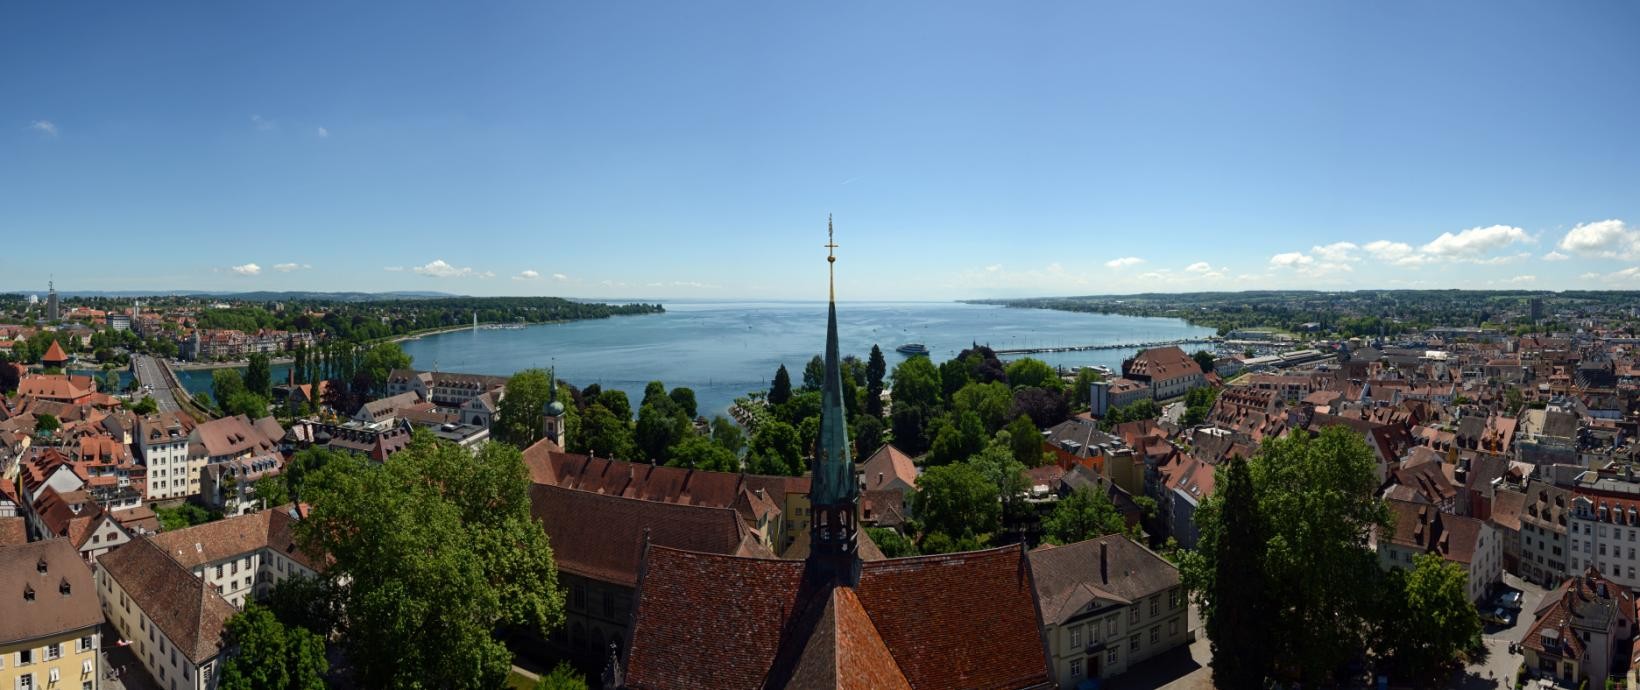 Blick über die Dächer der Konstanzer Altstadt